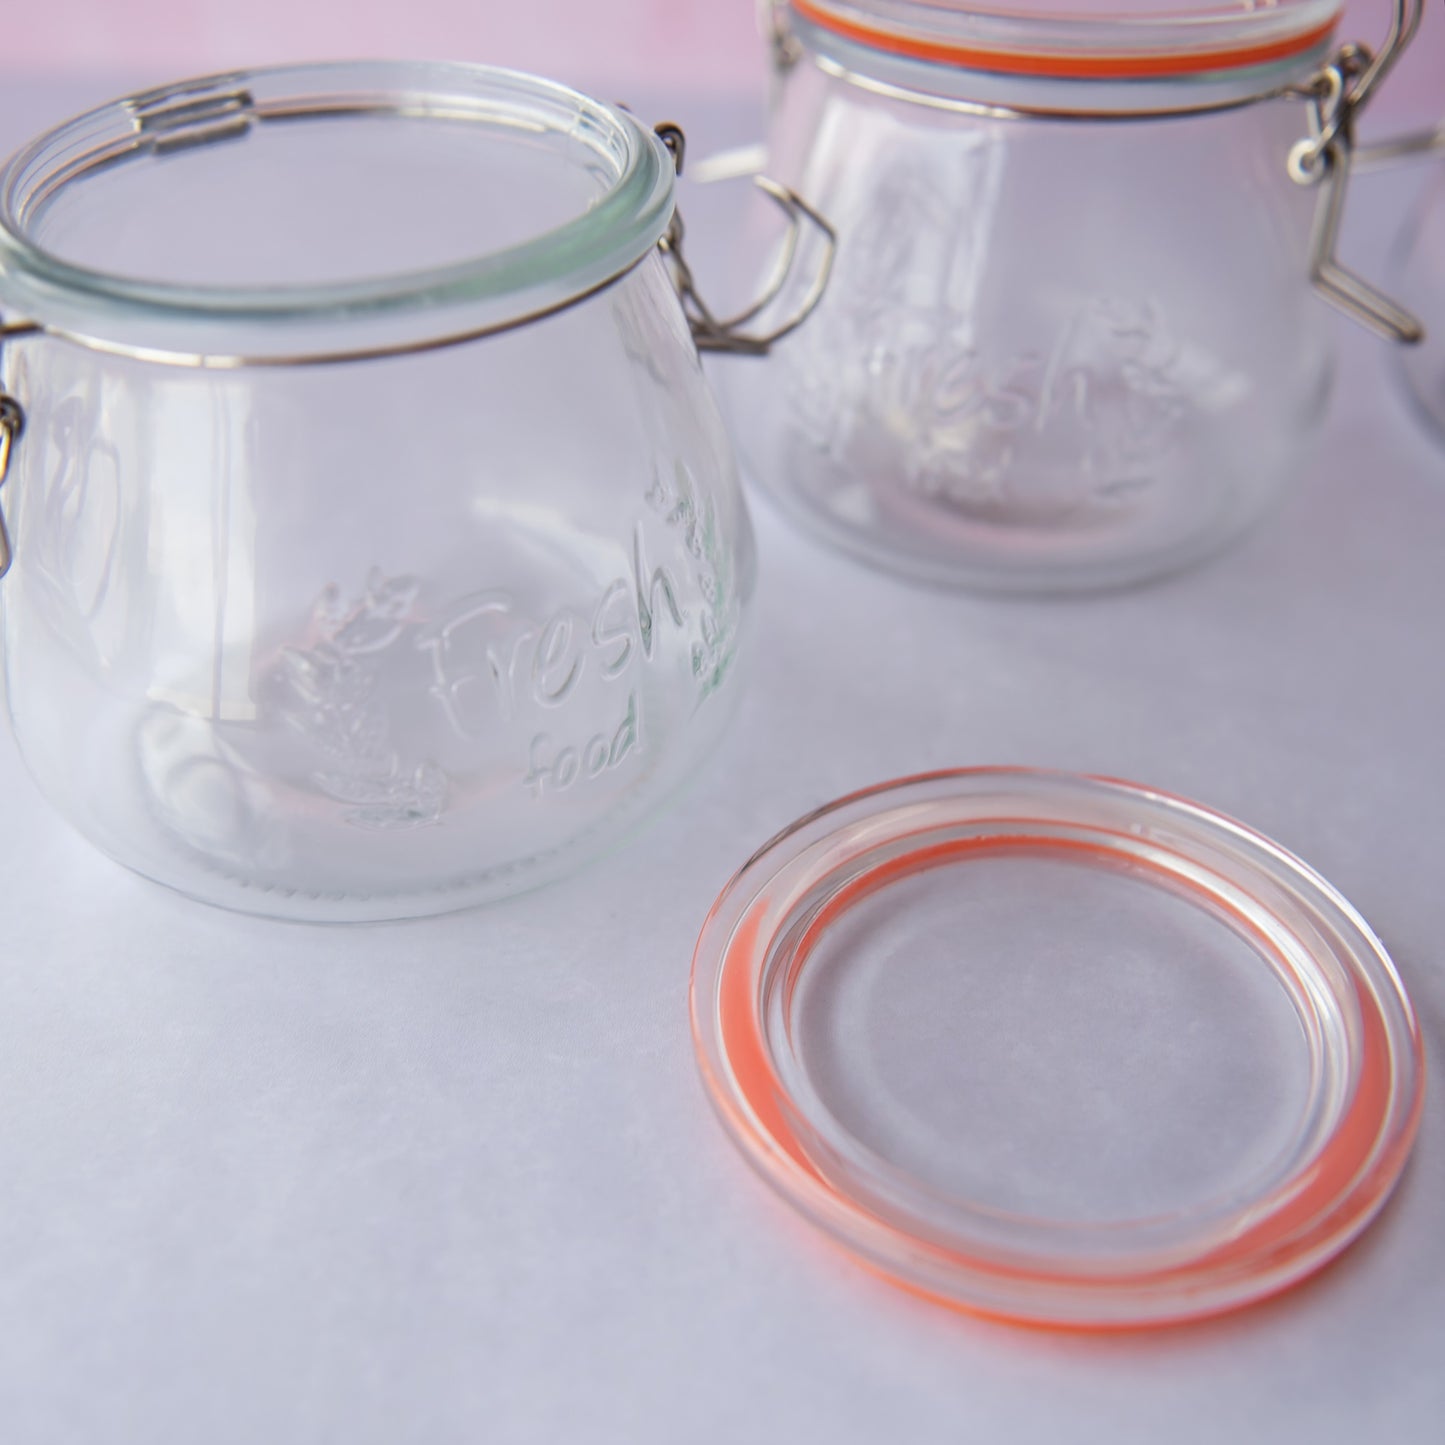 3 x 400ml Glass Storage Jars - Double Clip Top Lids